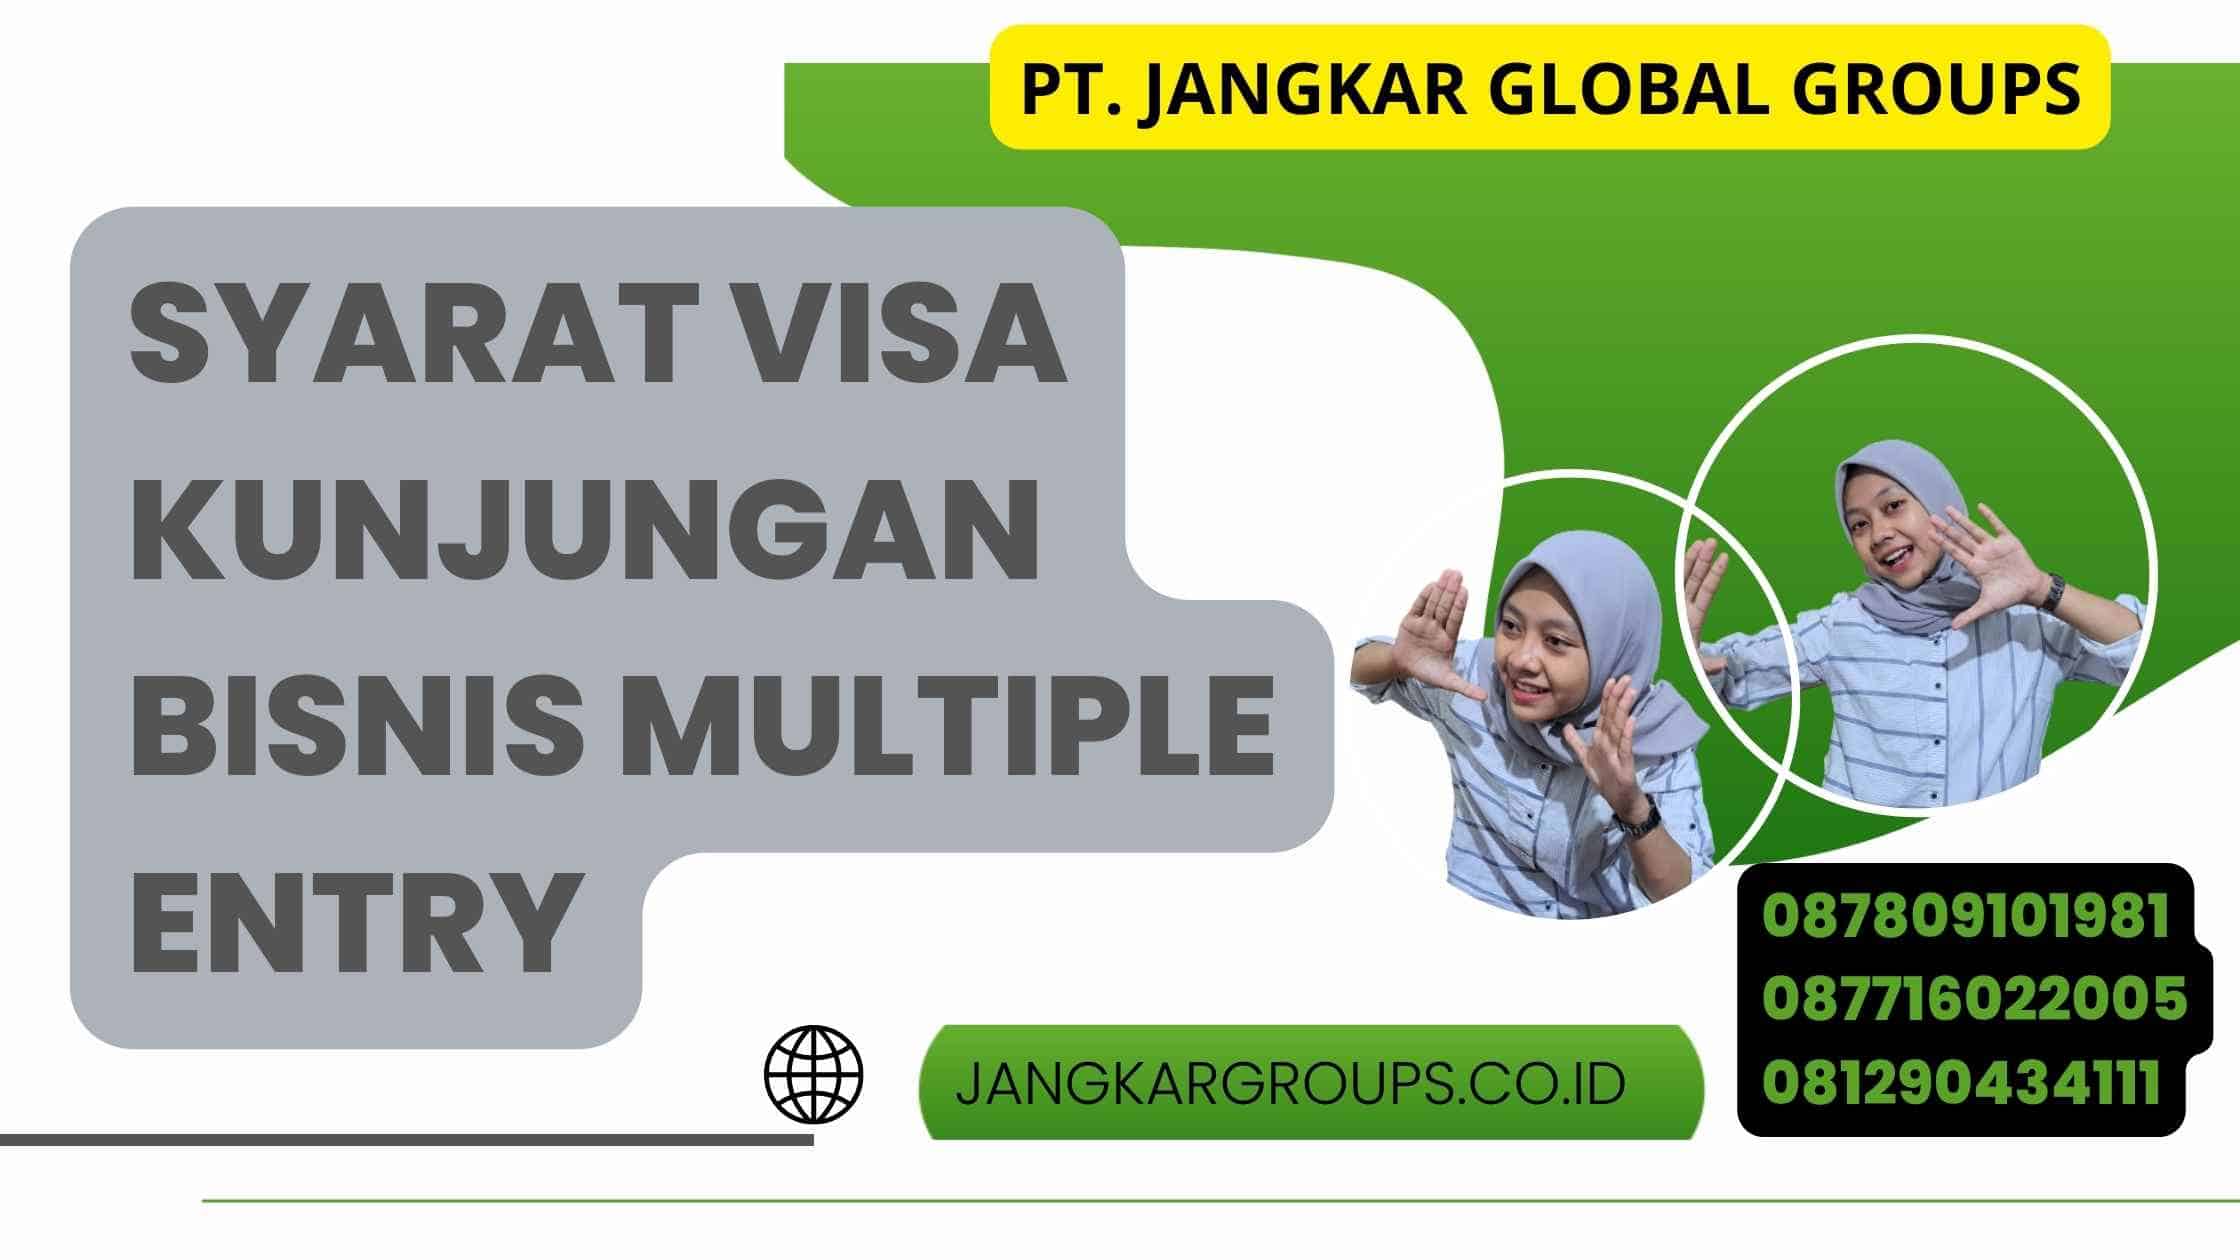 Syarat Visa Kunjungan Bisnis Multiple Entry